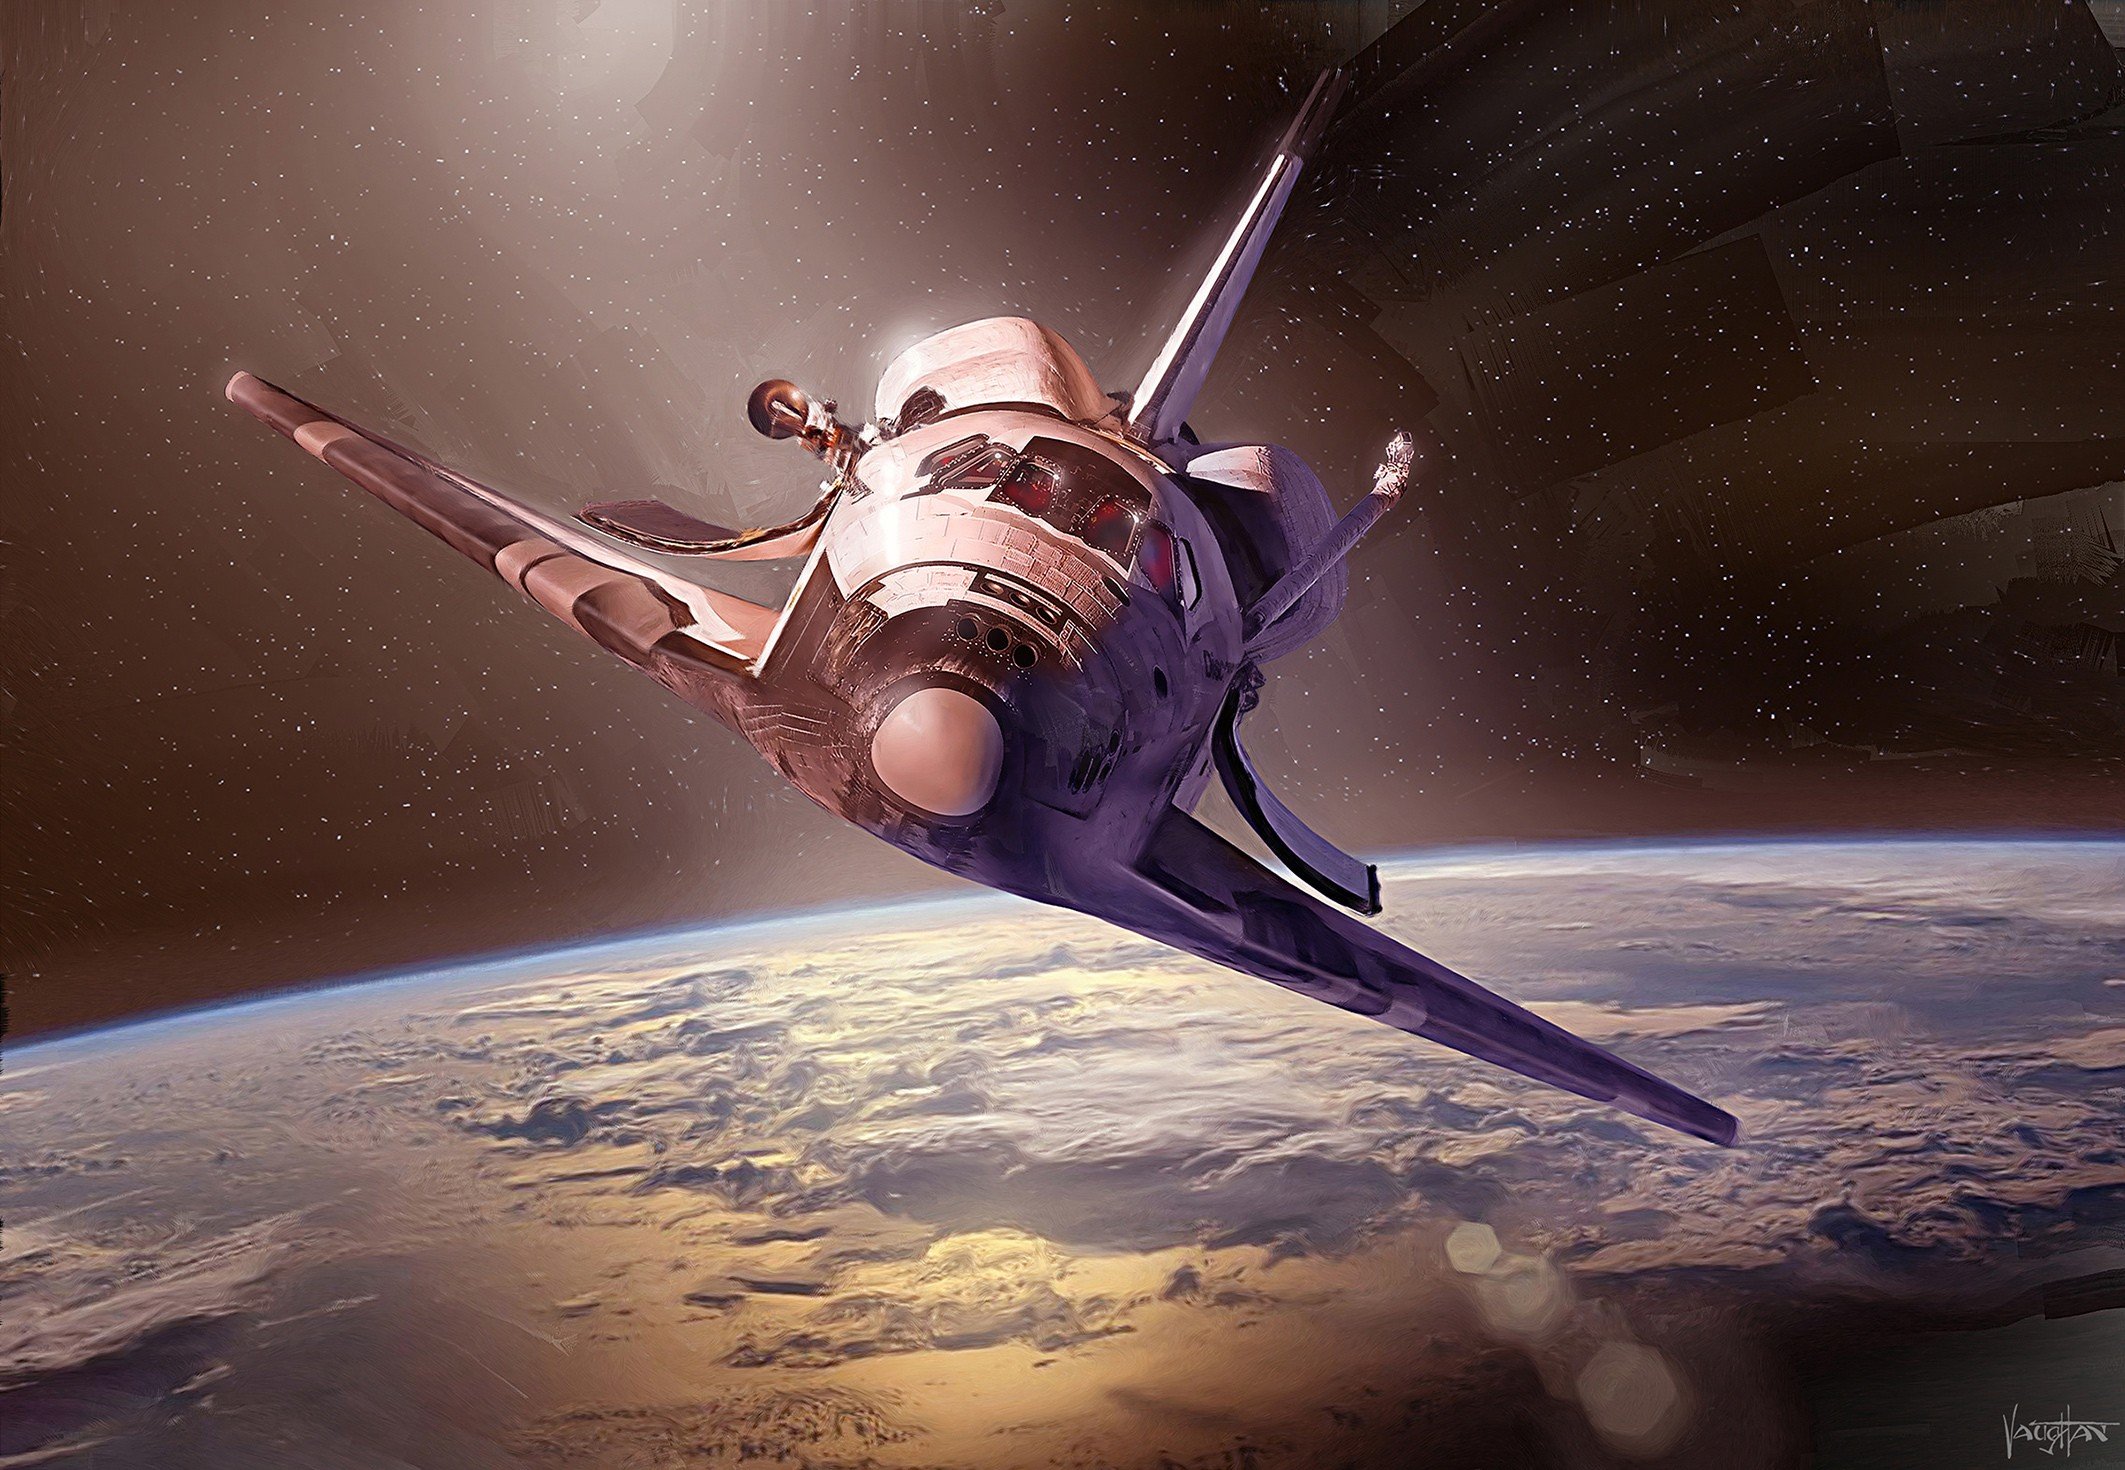 Space Shuttle Digital Art , HD Wallpaper & Backgrounds